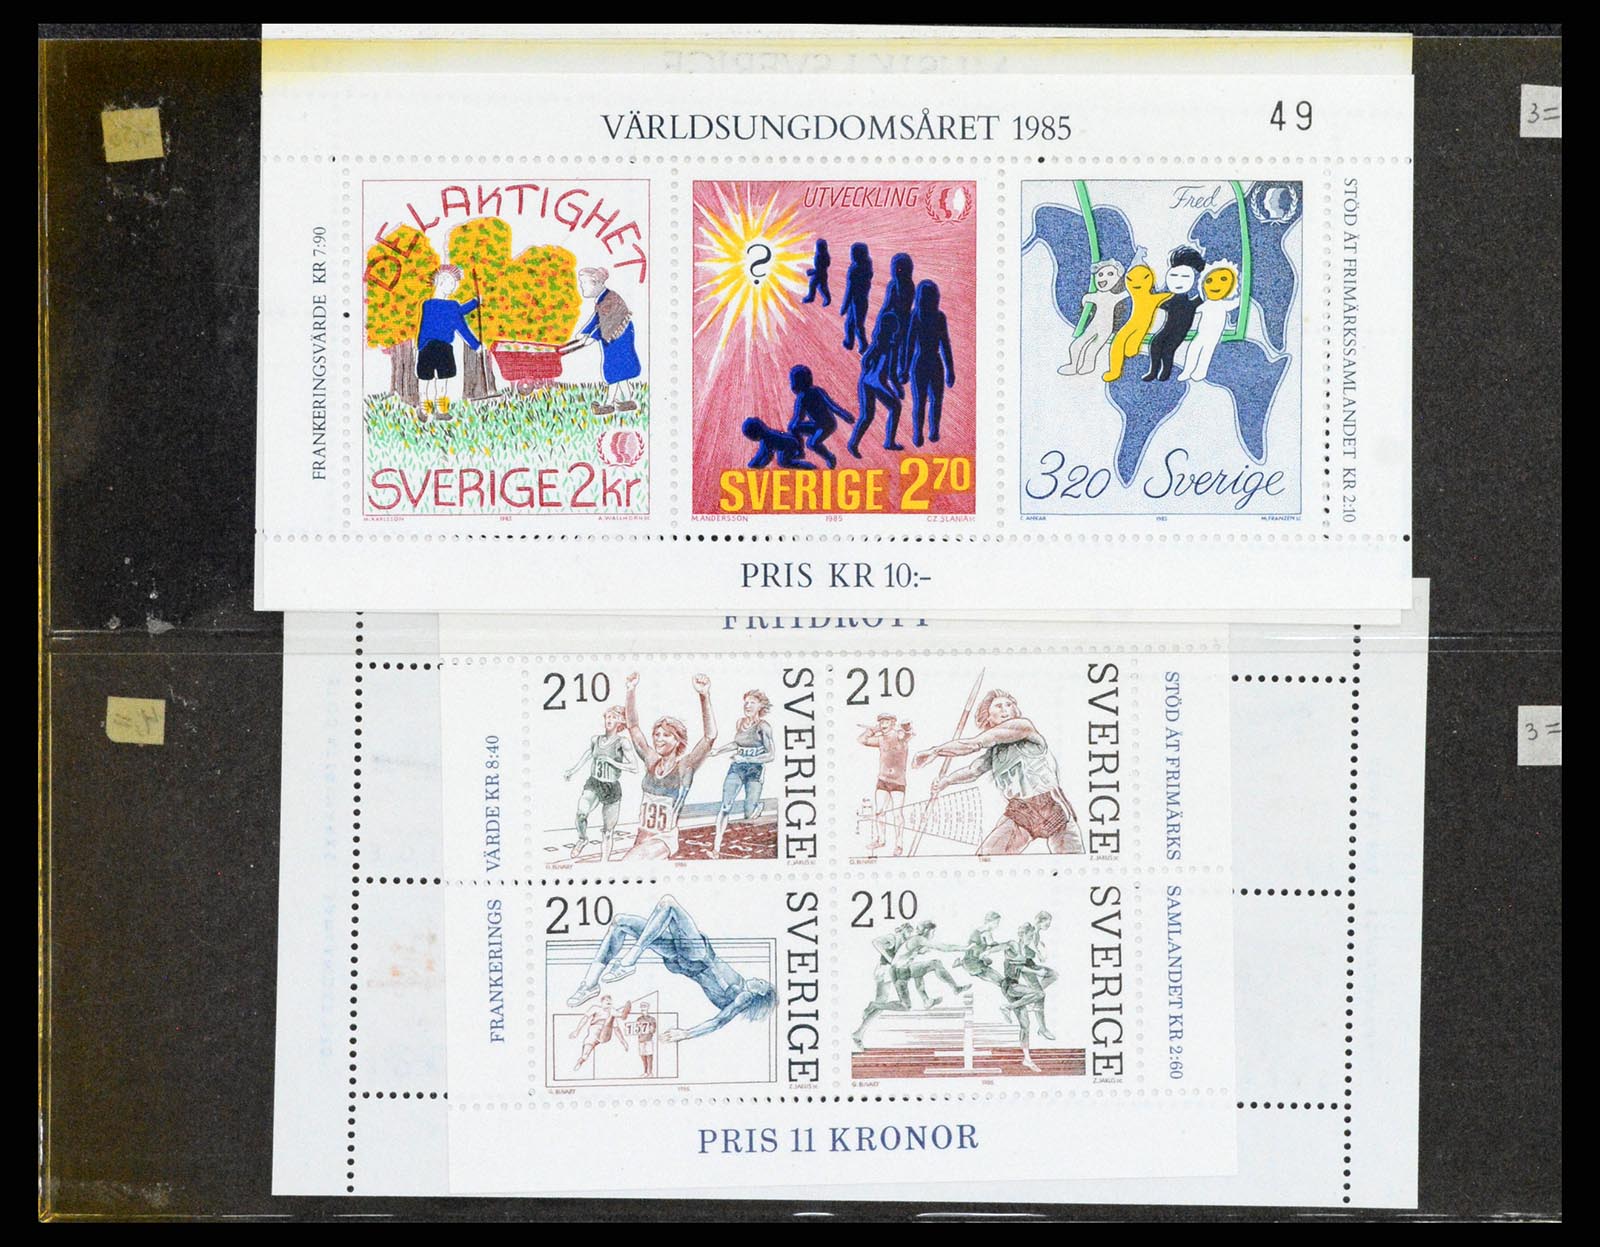 37341 004 - Stamp collection 37341 Sweden stamp booklets.